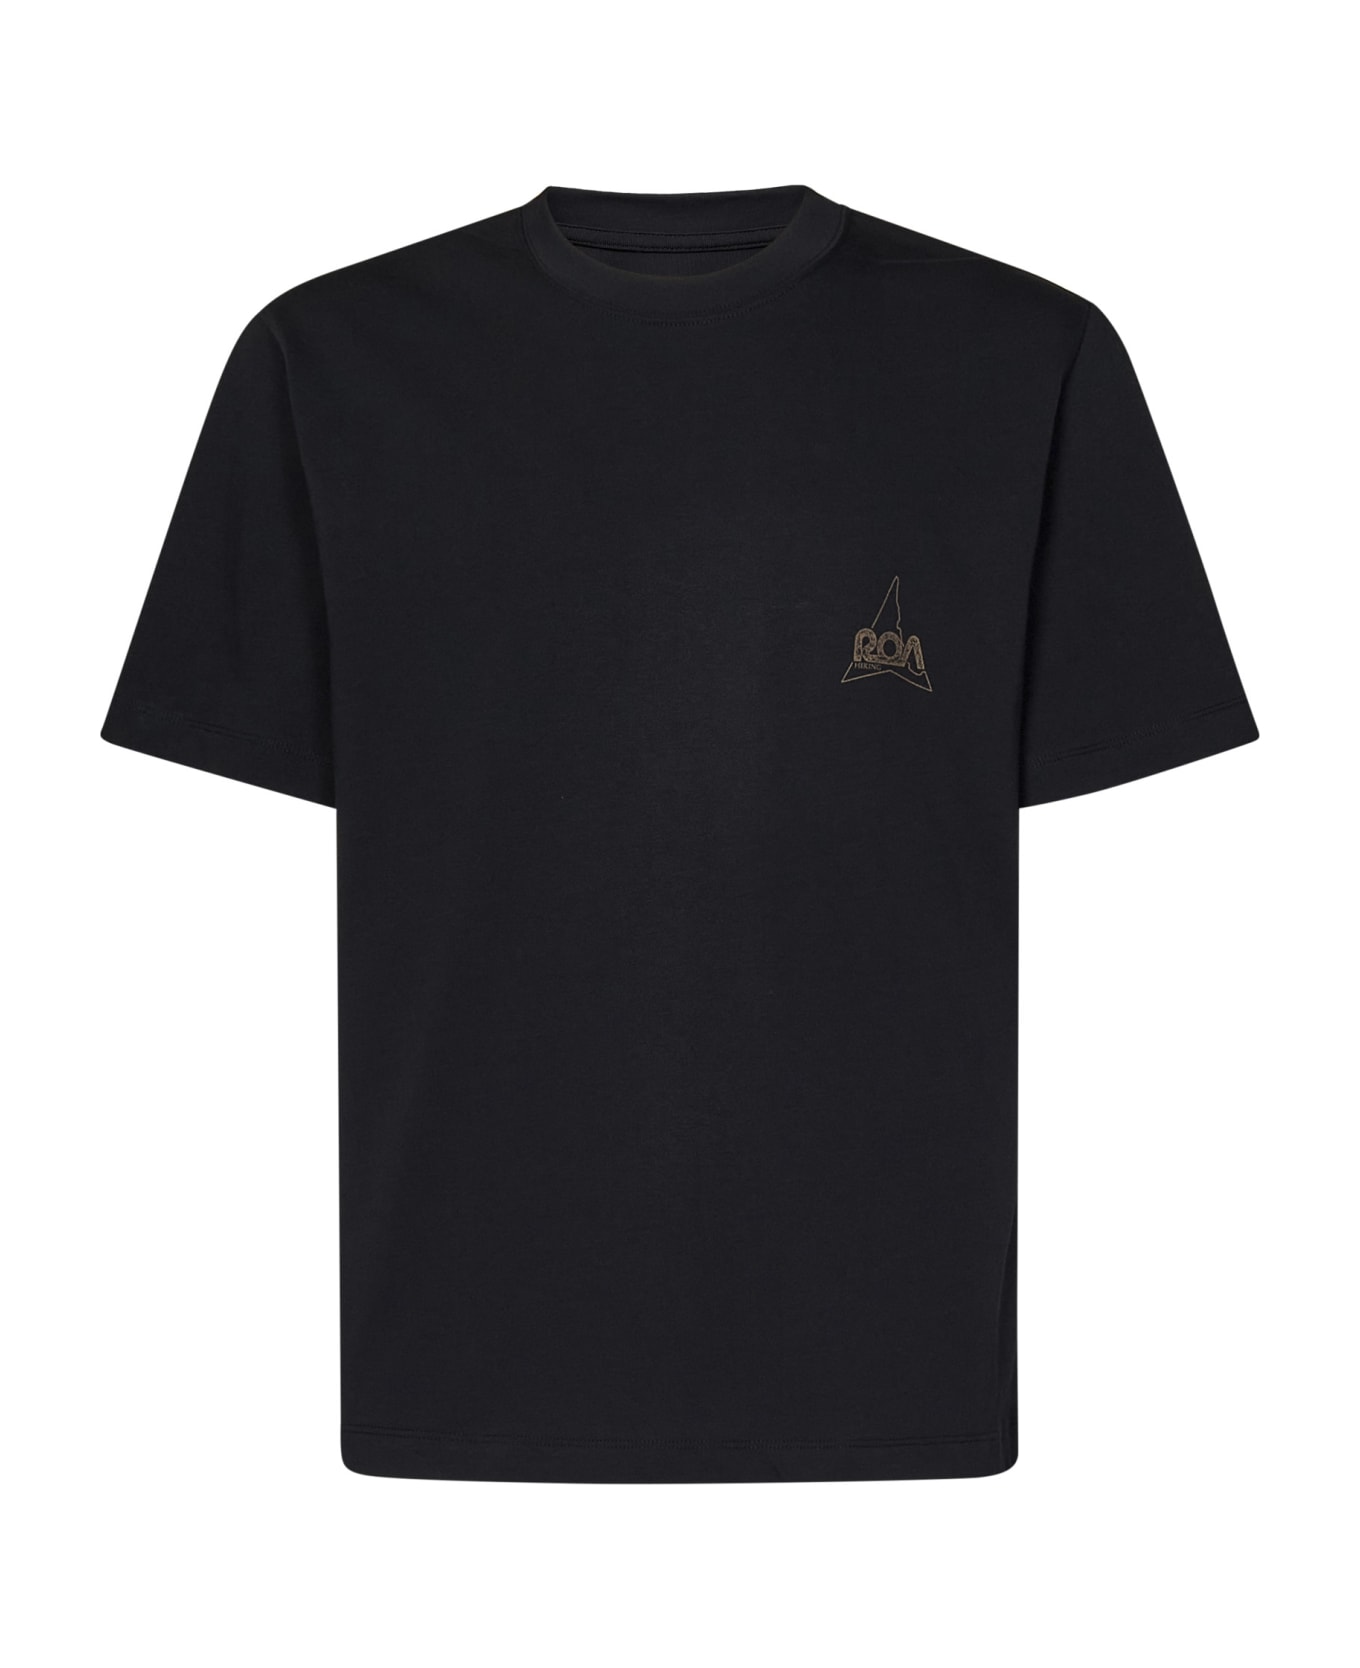 ROA T-shirt - Black シャツ